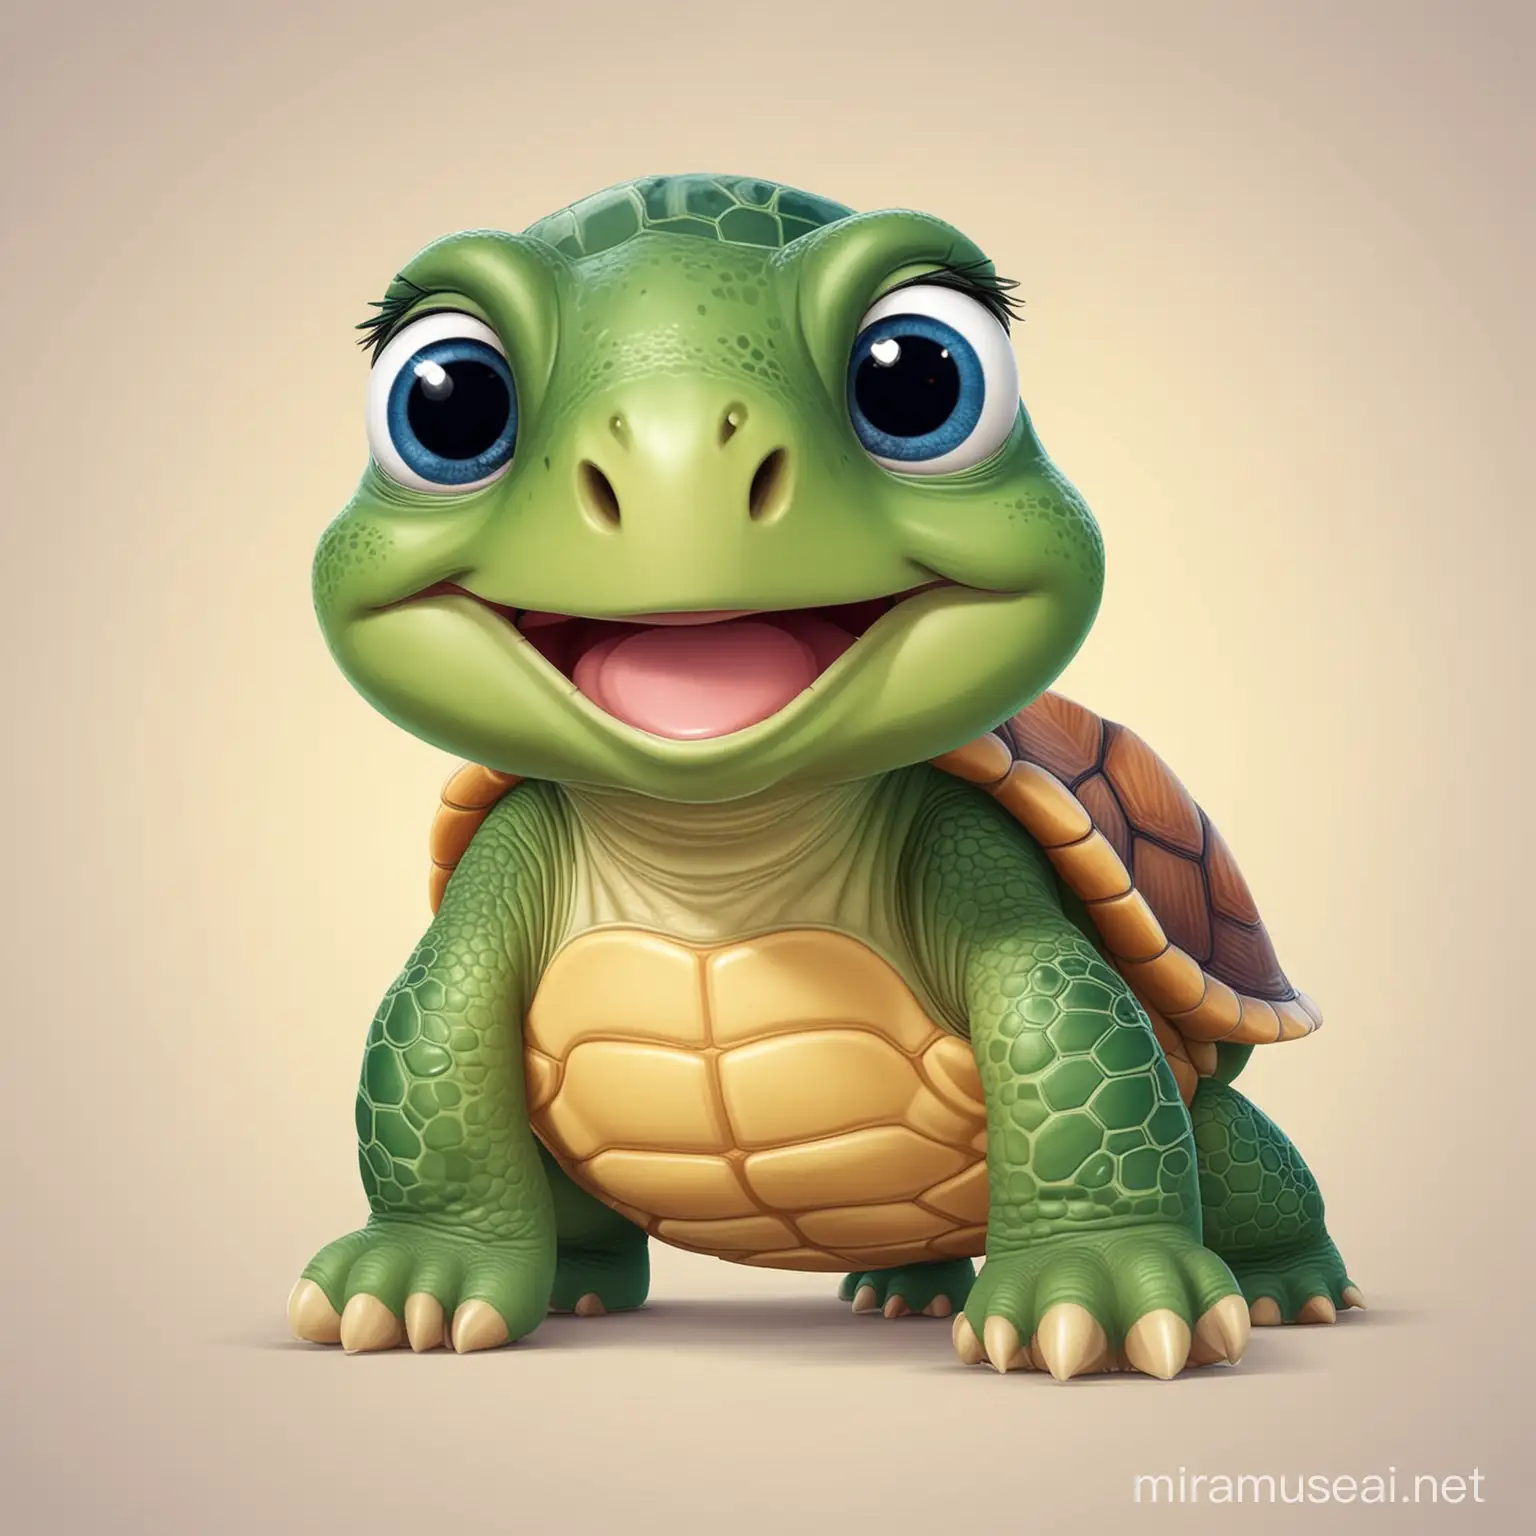 Cute turtle cartoon character